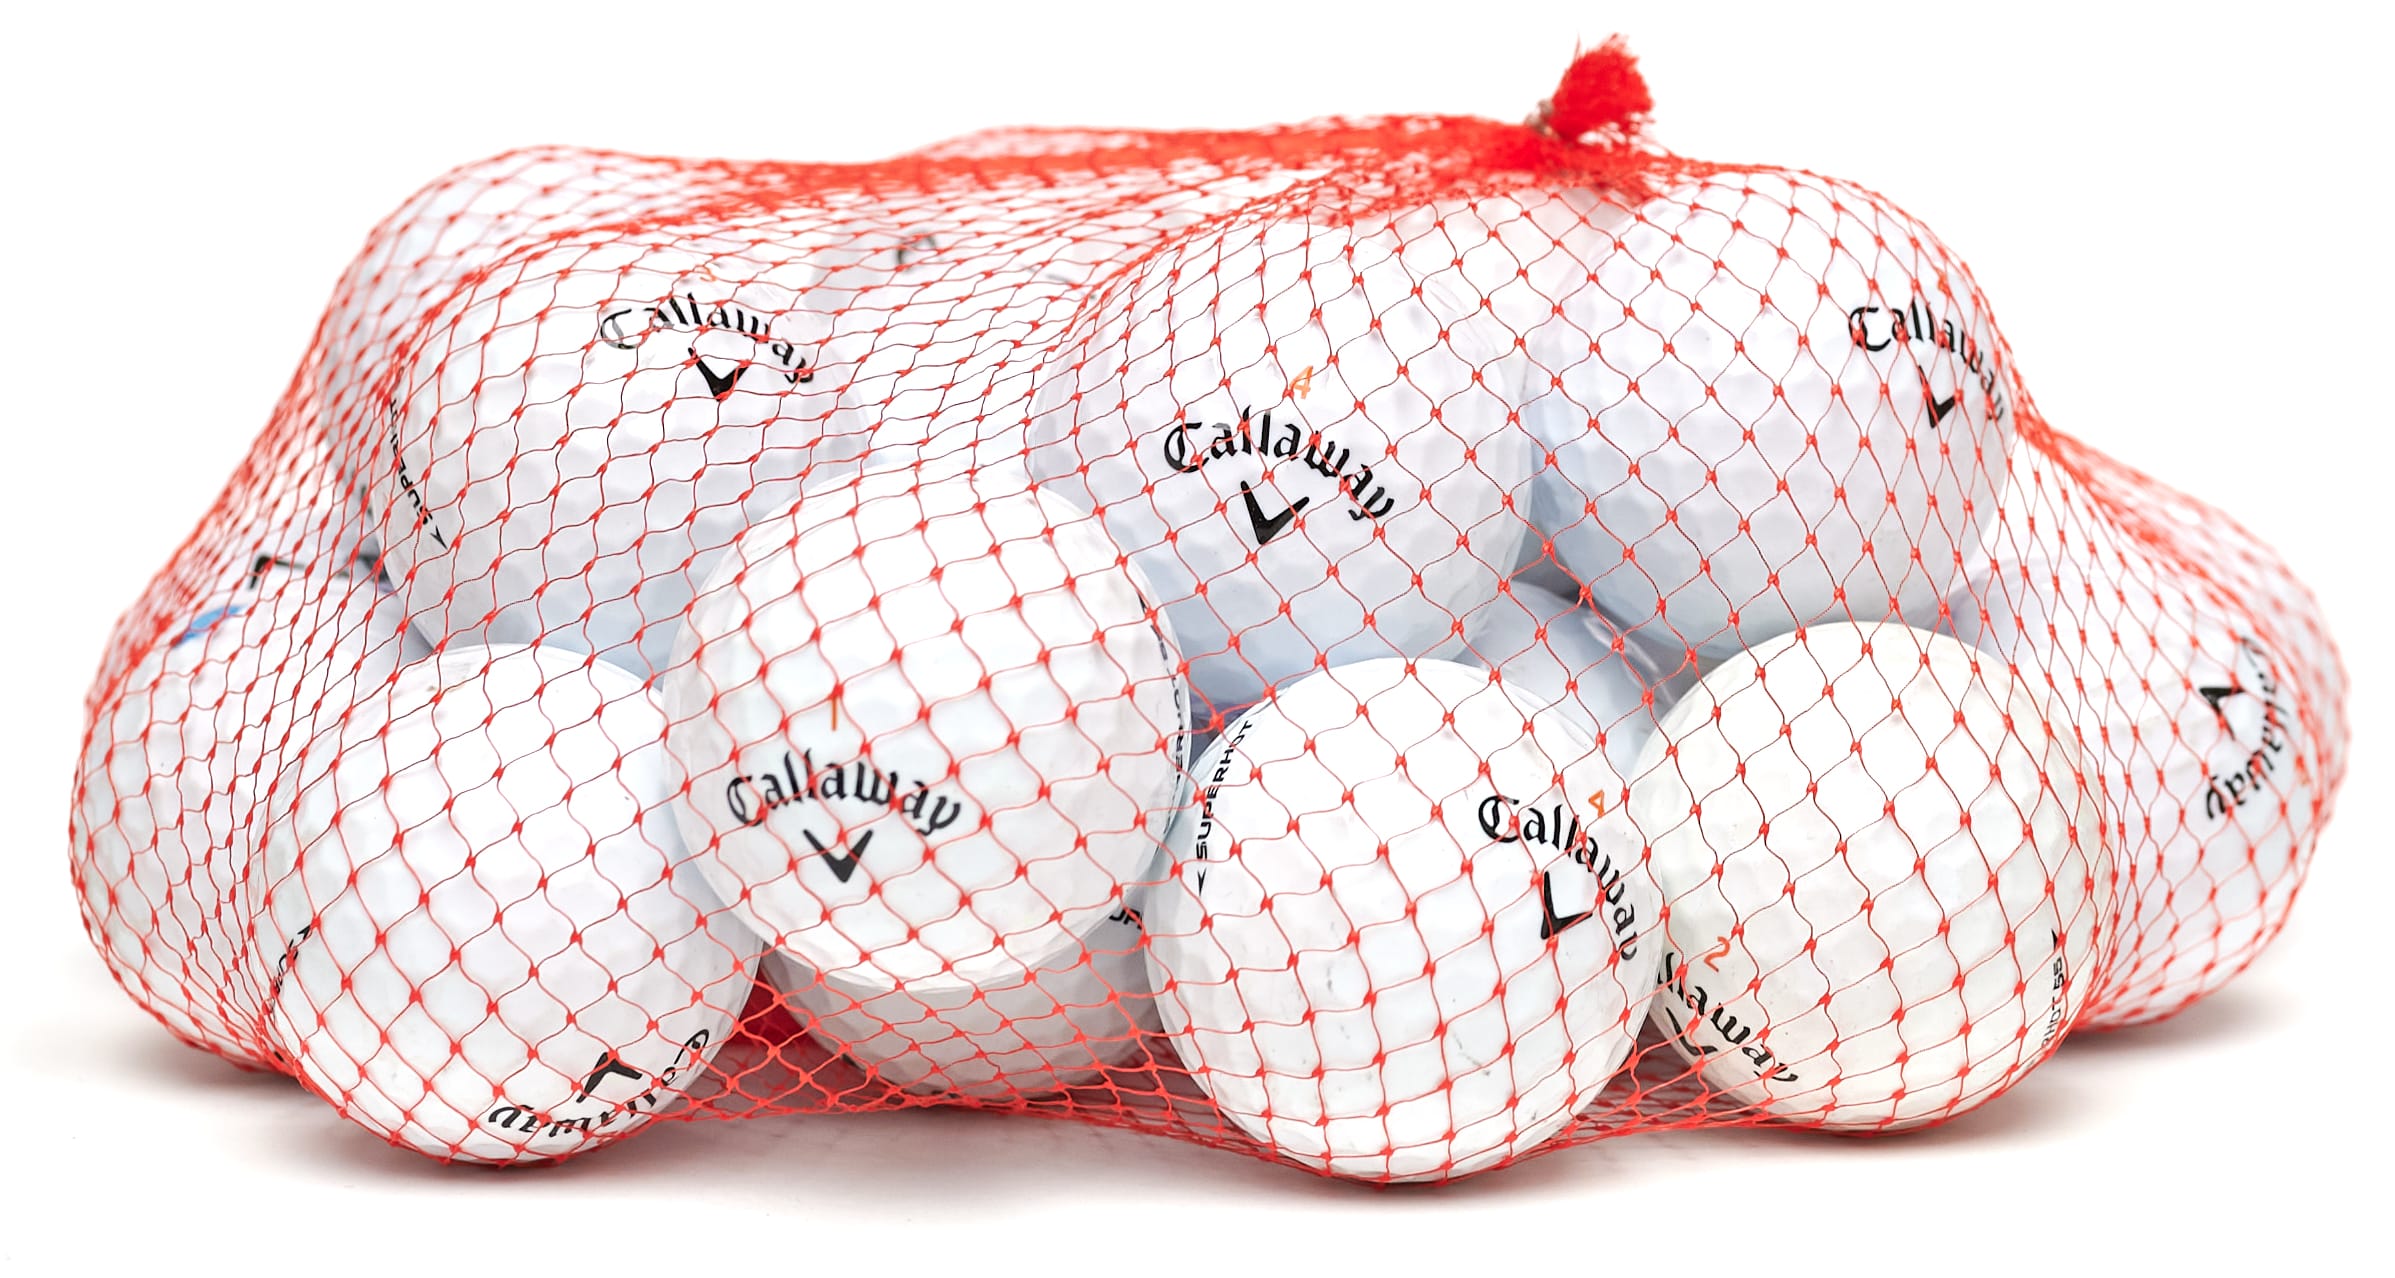 25 Callaway Superhot Lakeballs, white